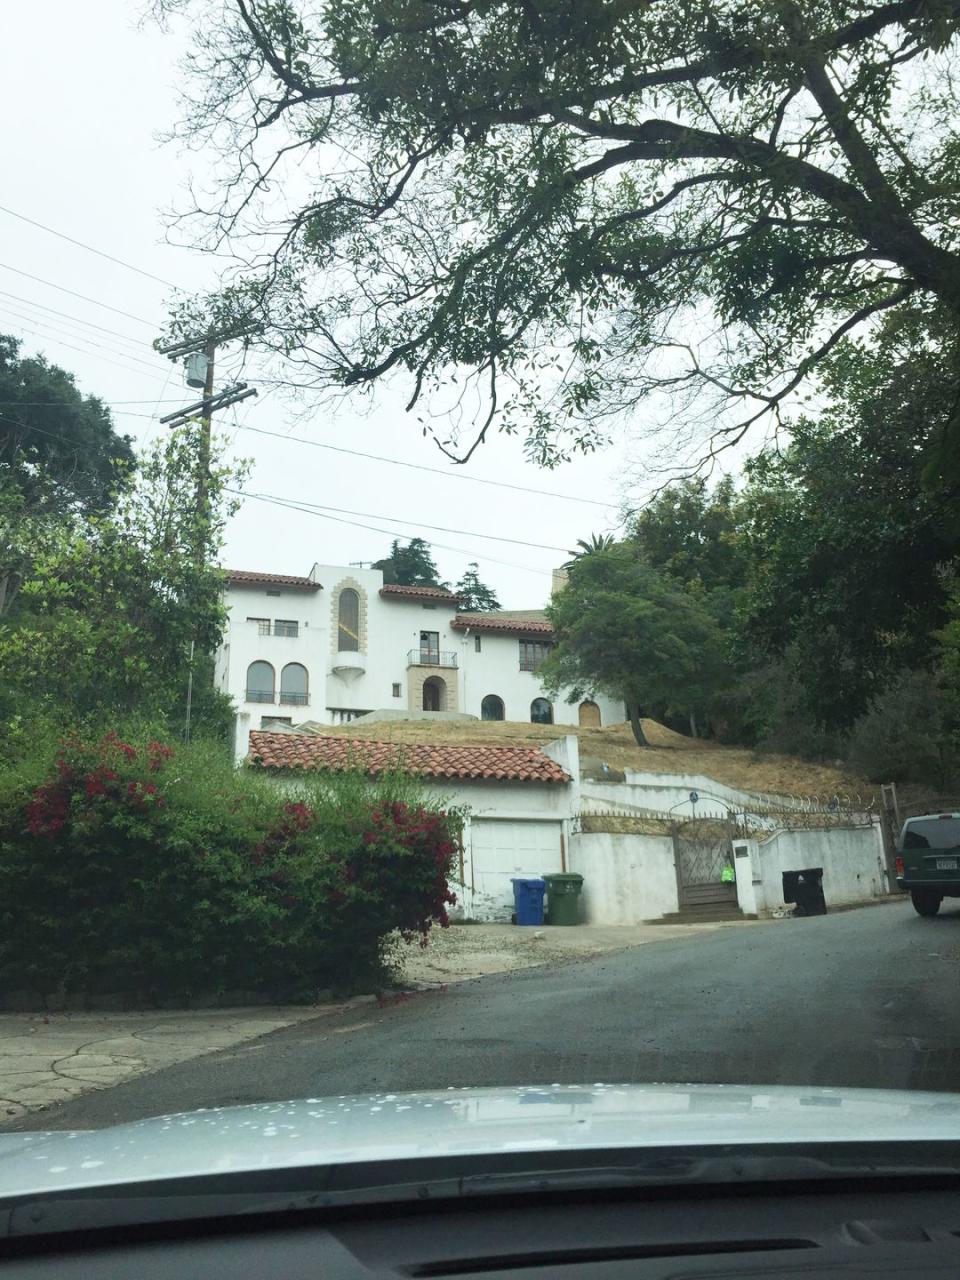 12) The Los Feliz Murder House